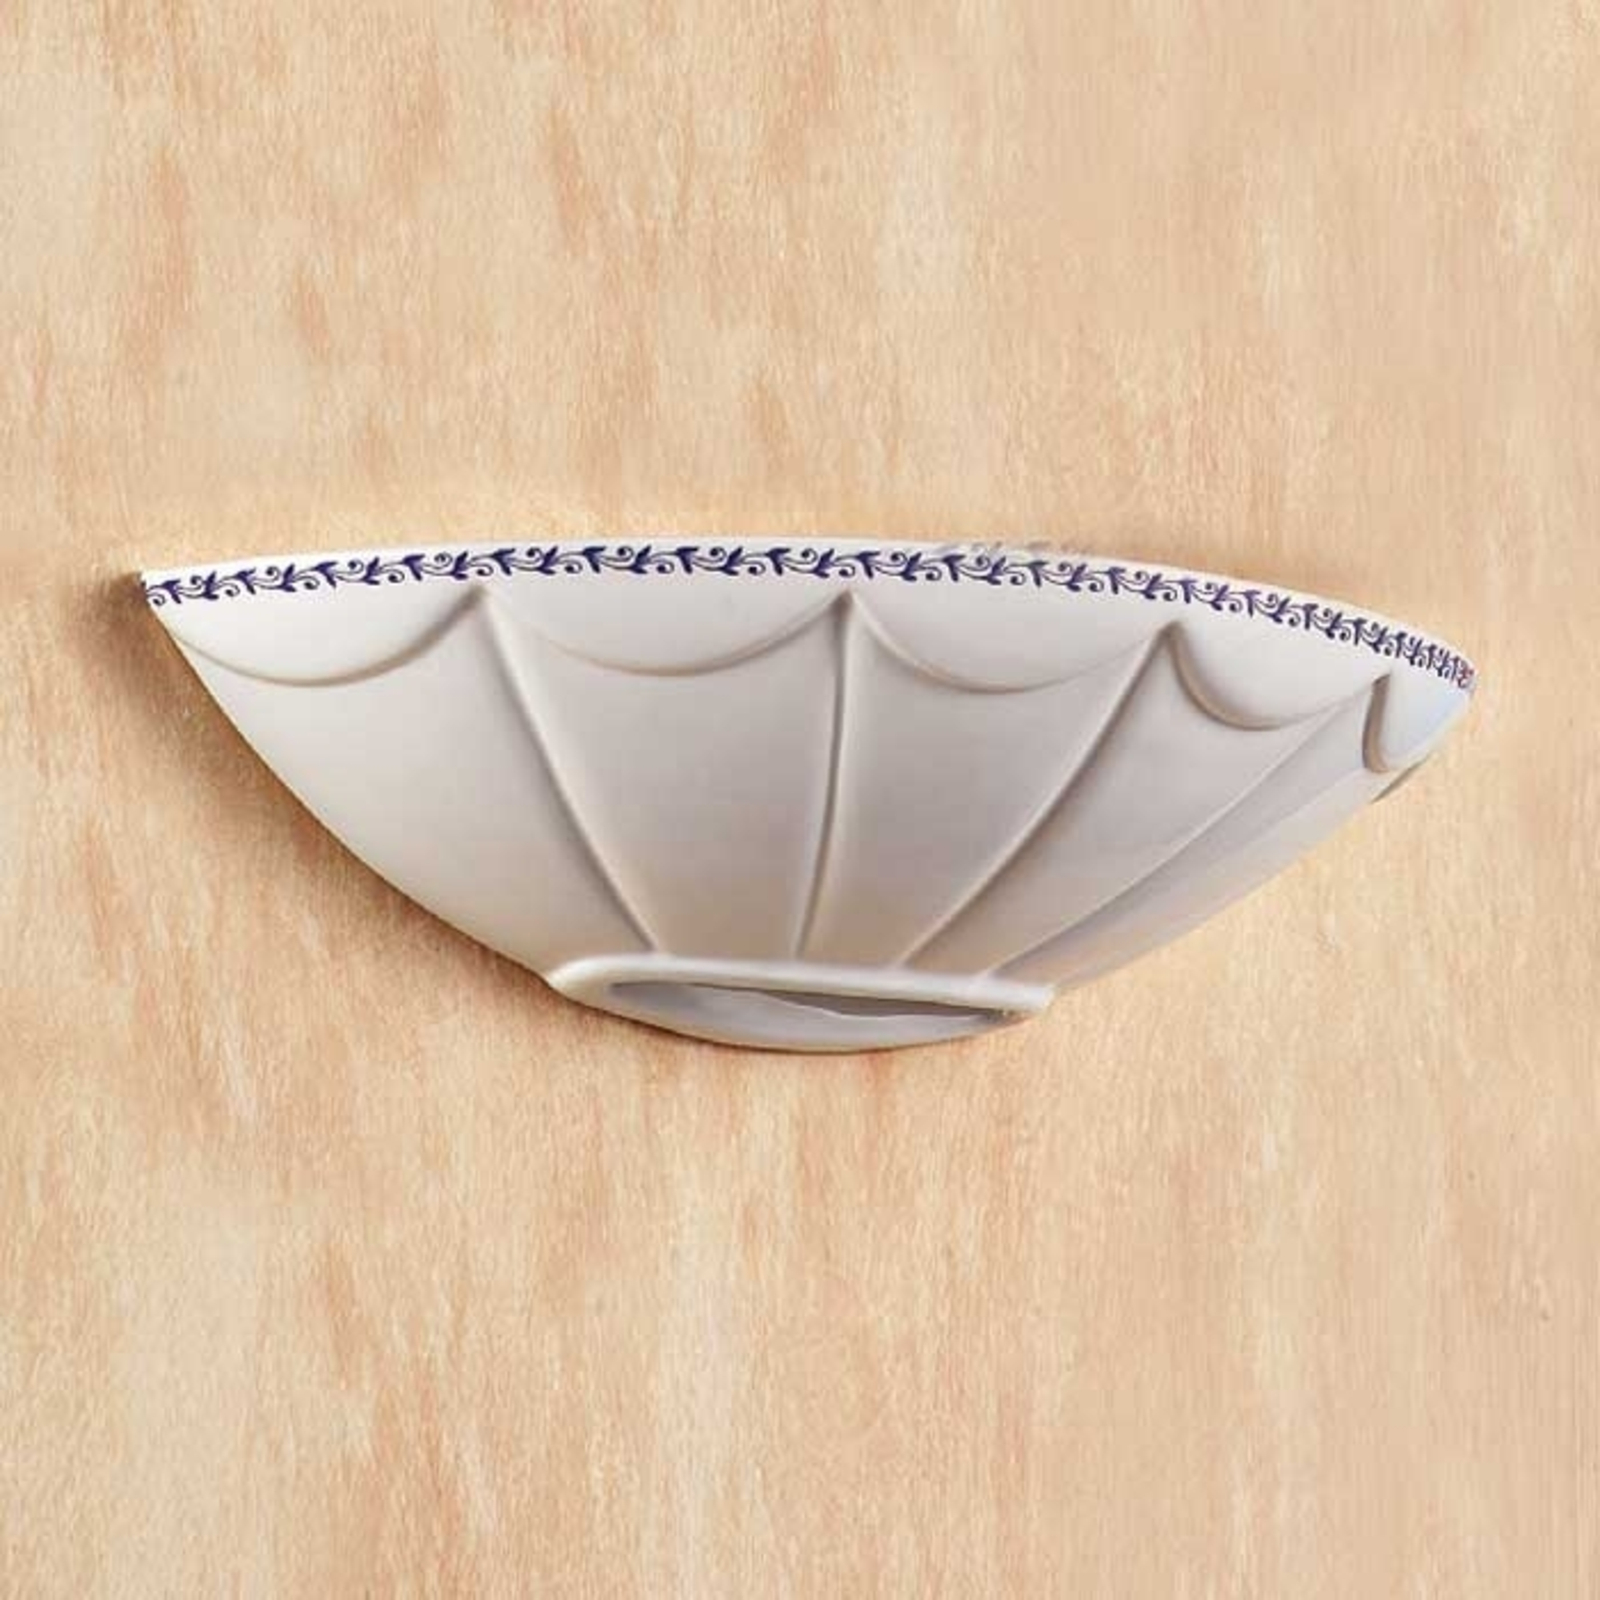 Il Punti wall light with semicircular ceramic bowl